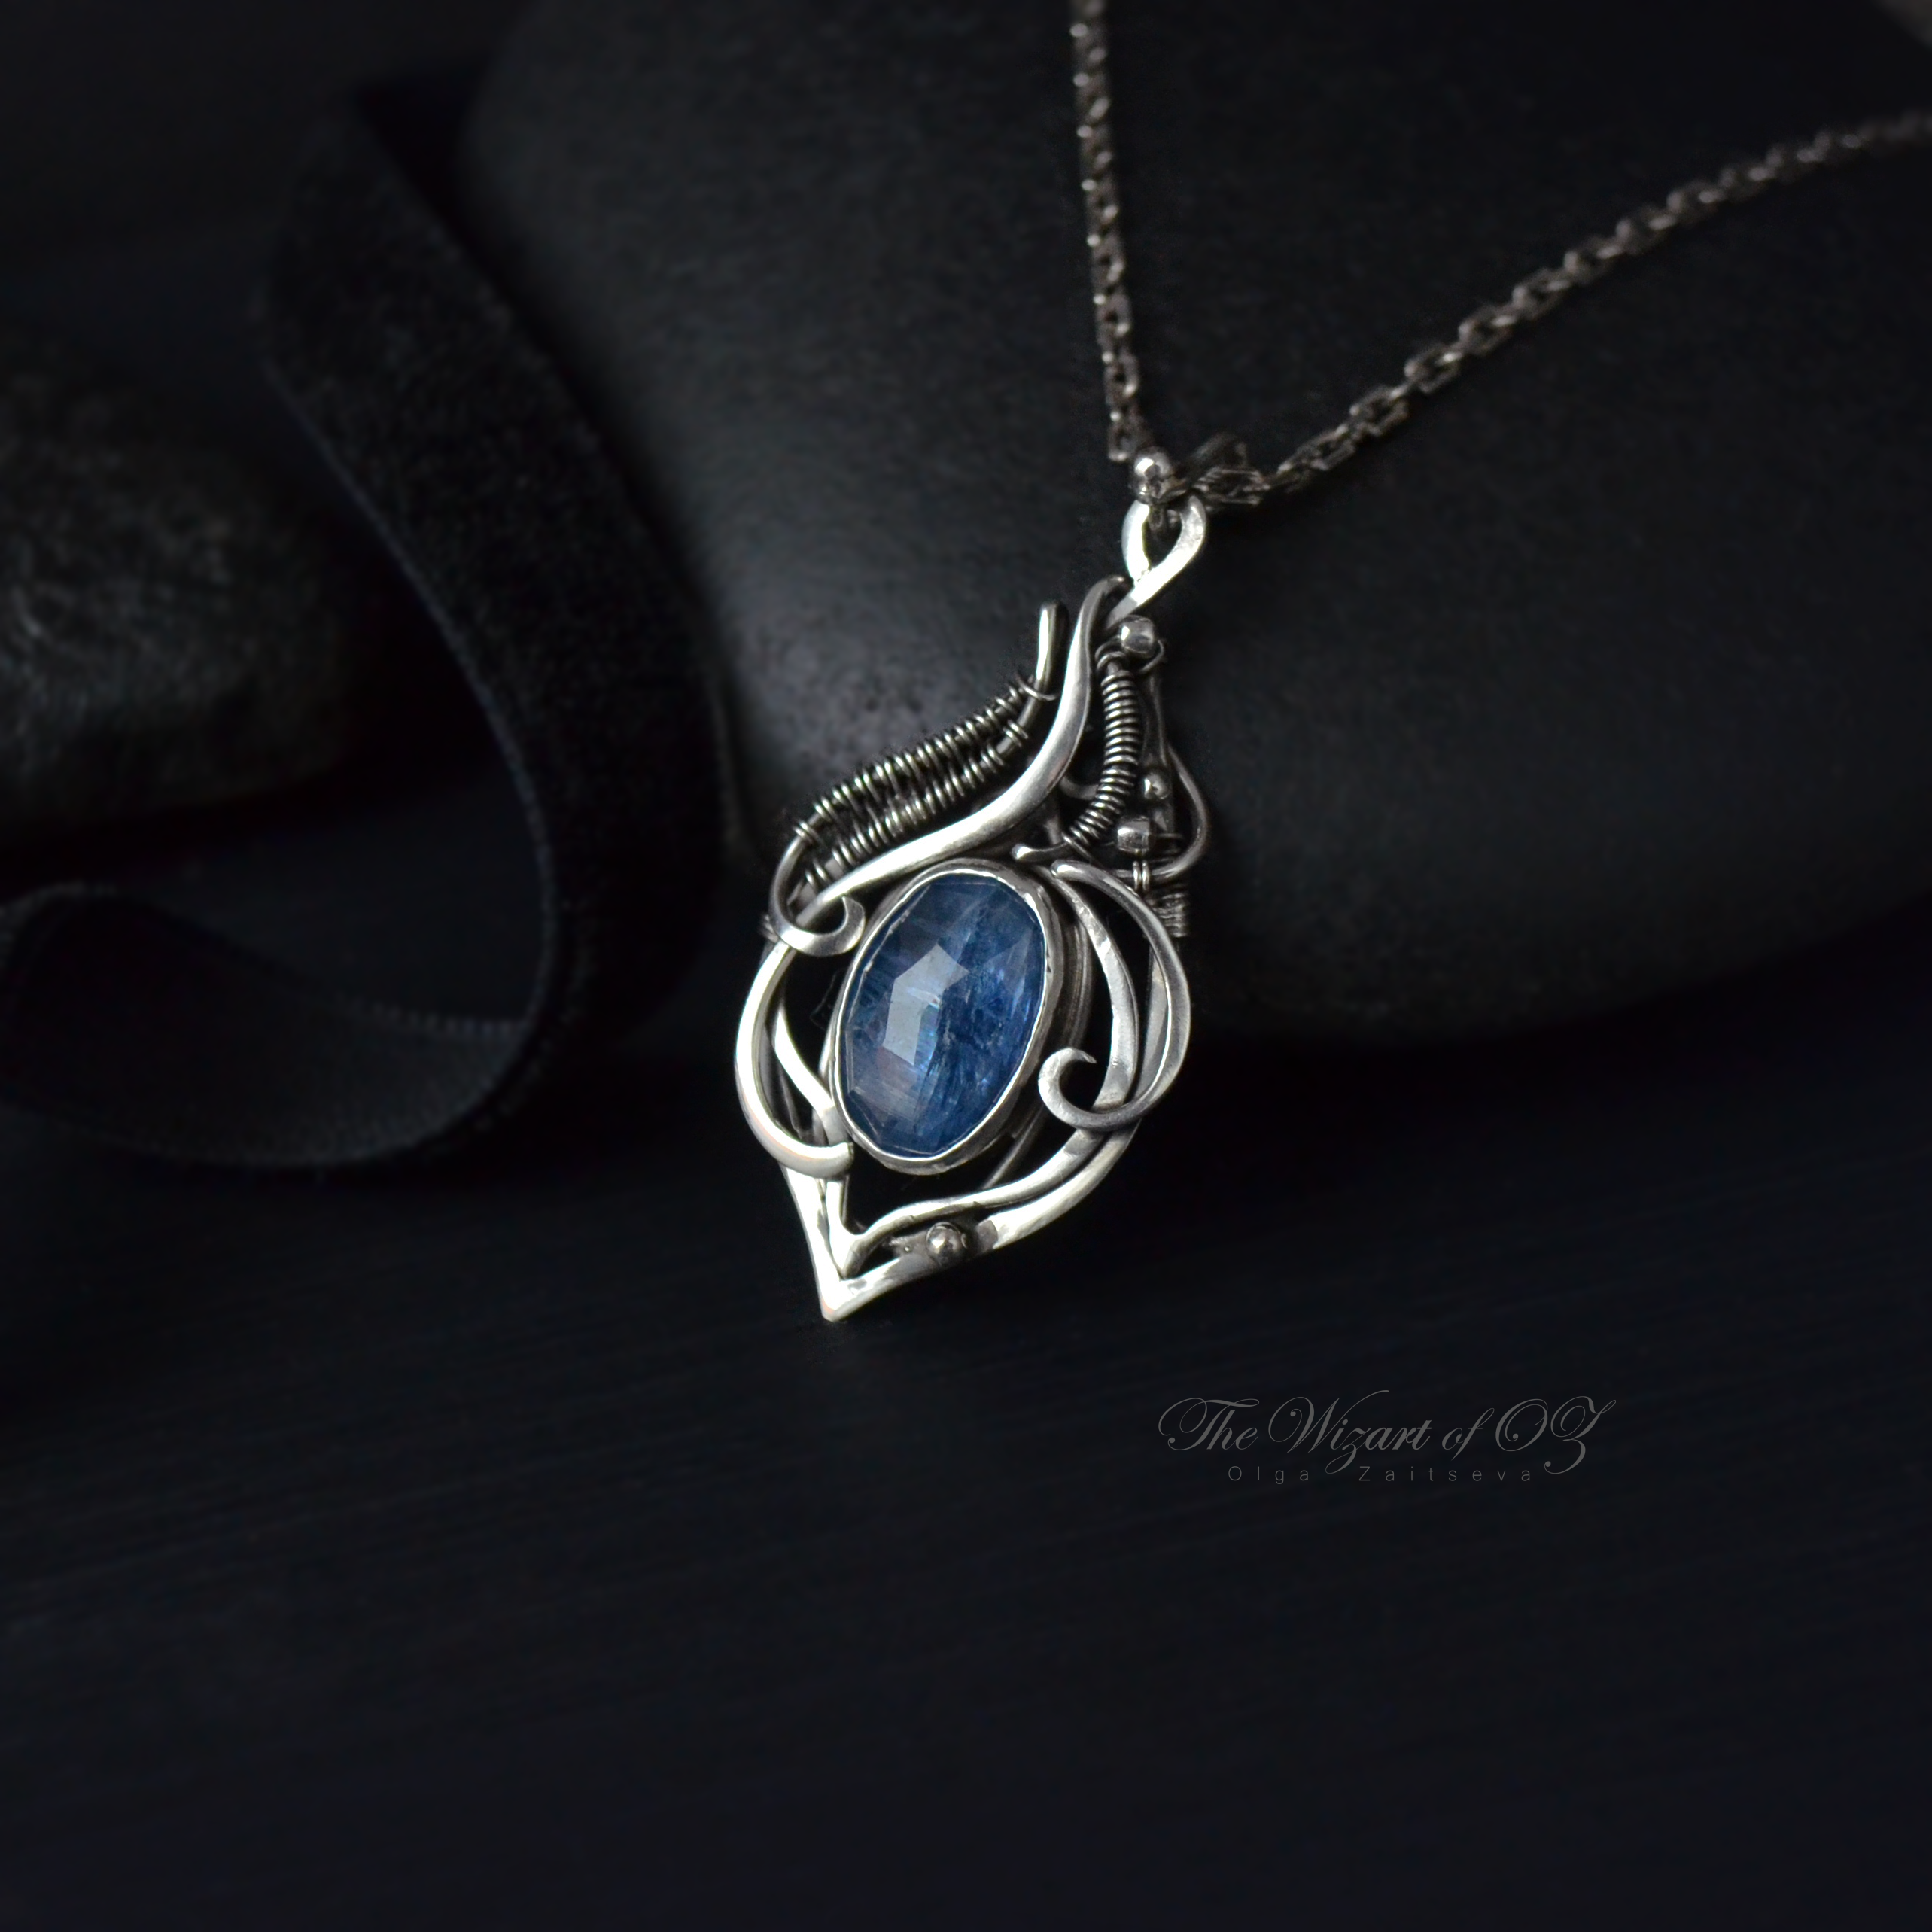 Fantasy kyanite necklace in 925 sterling silver Romantic gift